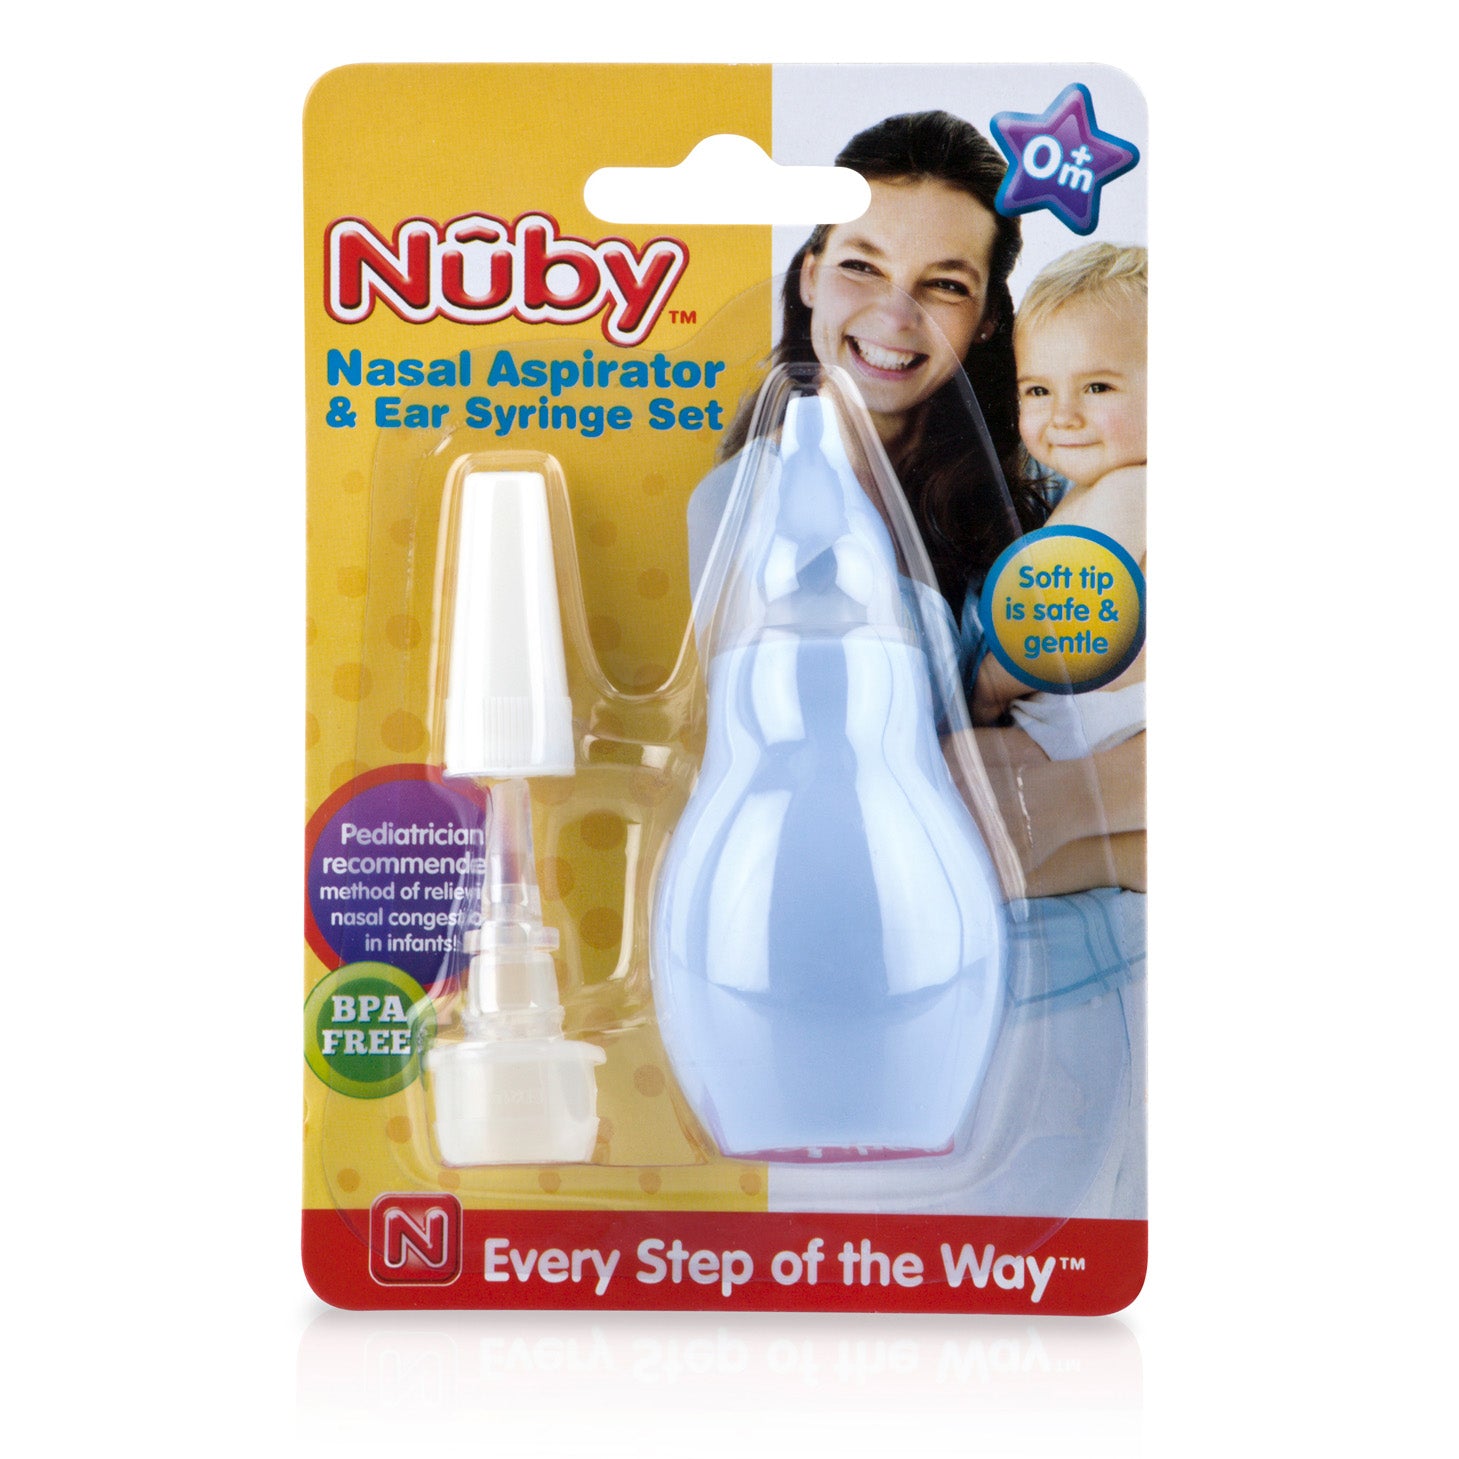 Nuby Nasal Aspirator & Ear Syringe Set - Your new shopping destination